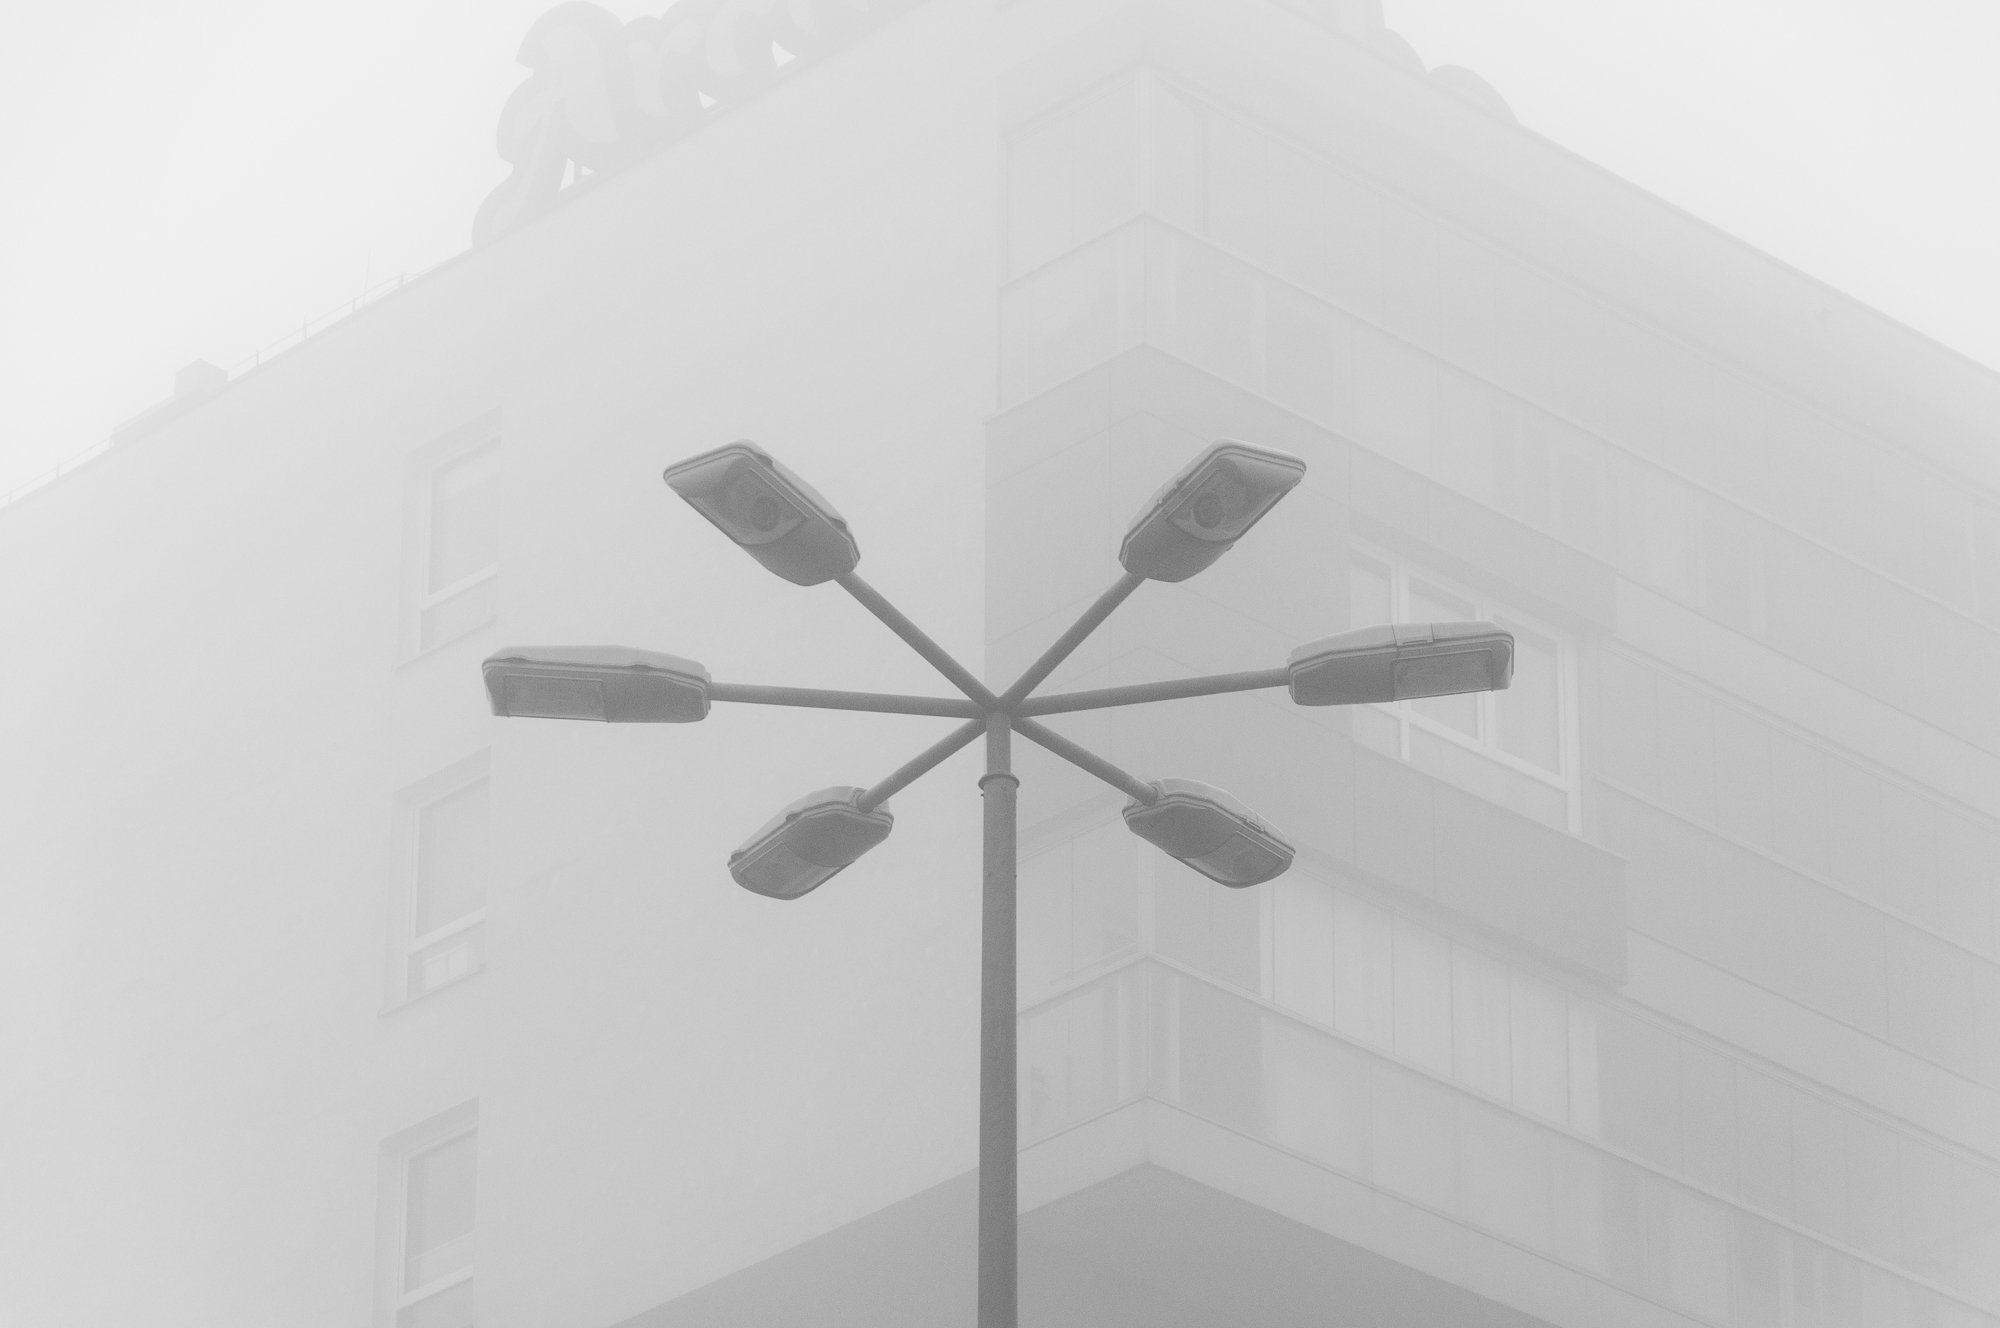 Adam Mazek Photography Warsaw (Warszawa) 2020. Post: "Necessities." Minimalism. Street lamp.